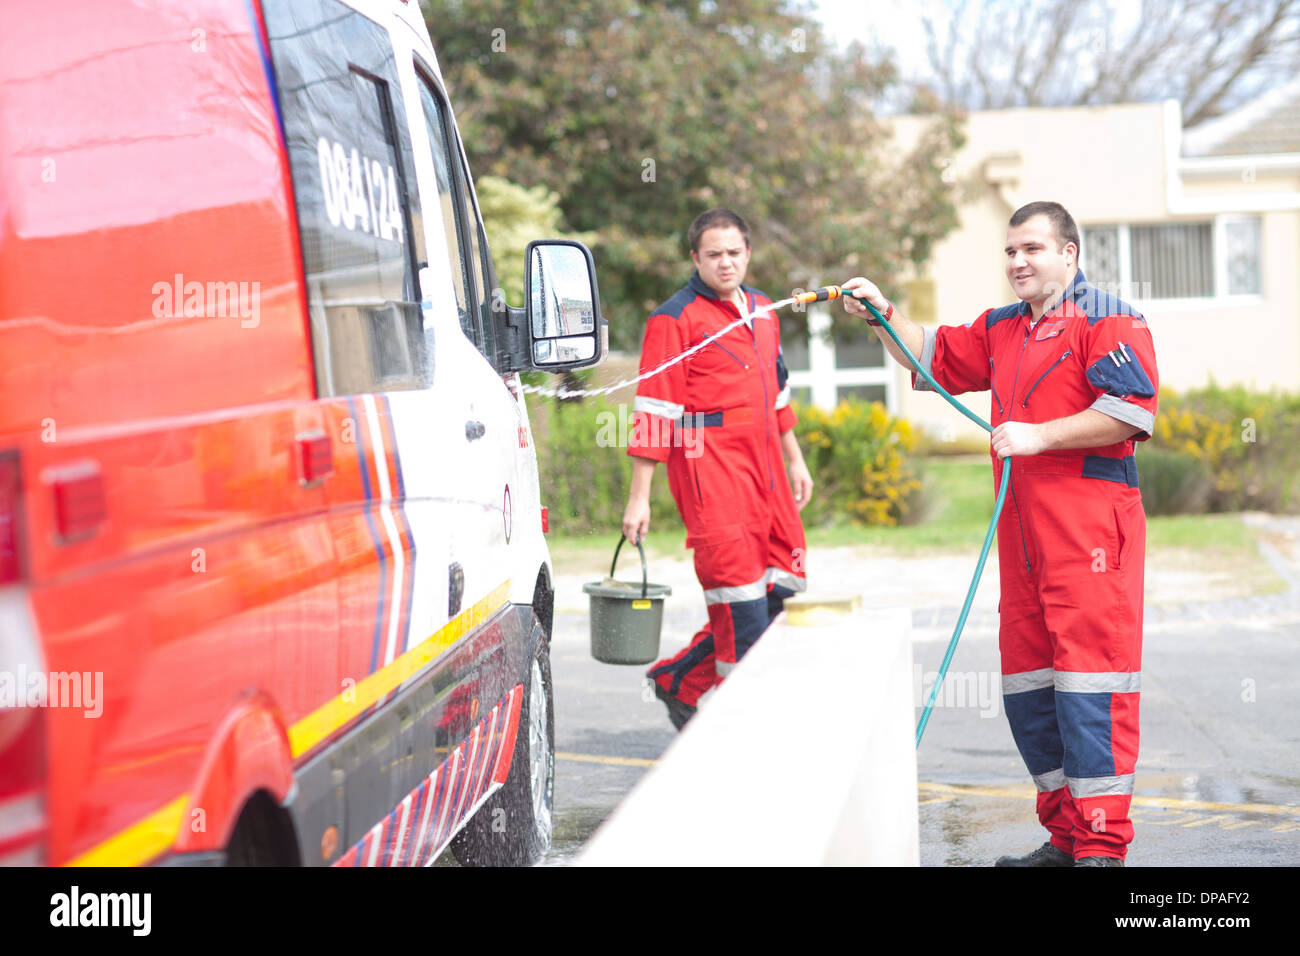 Paramedics cleaning ambulance with hosepipe Stock Photo